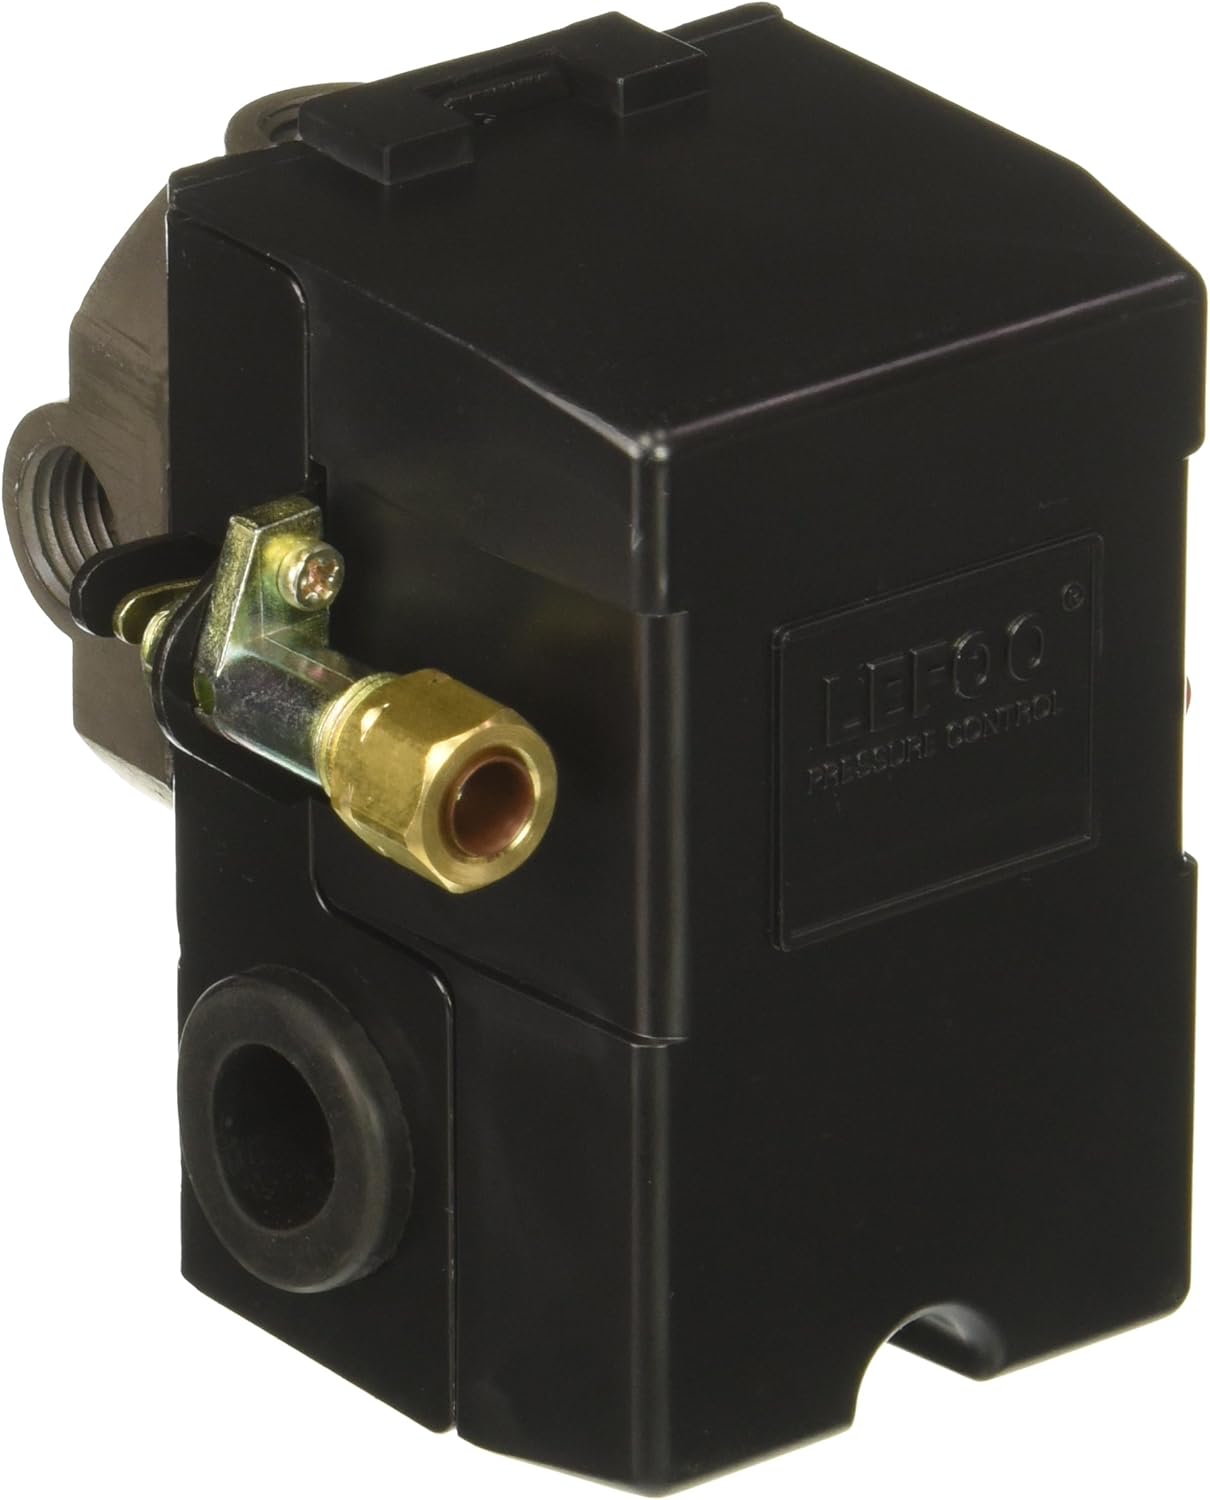 Lefoo Air Compressor Switch Pressure Control Switch Valve for Air Compressor Replaces Furnas Square D H4 - Lf10-4h-1-npt1/4-140